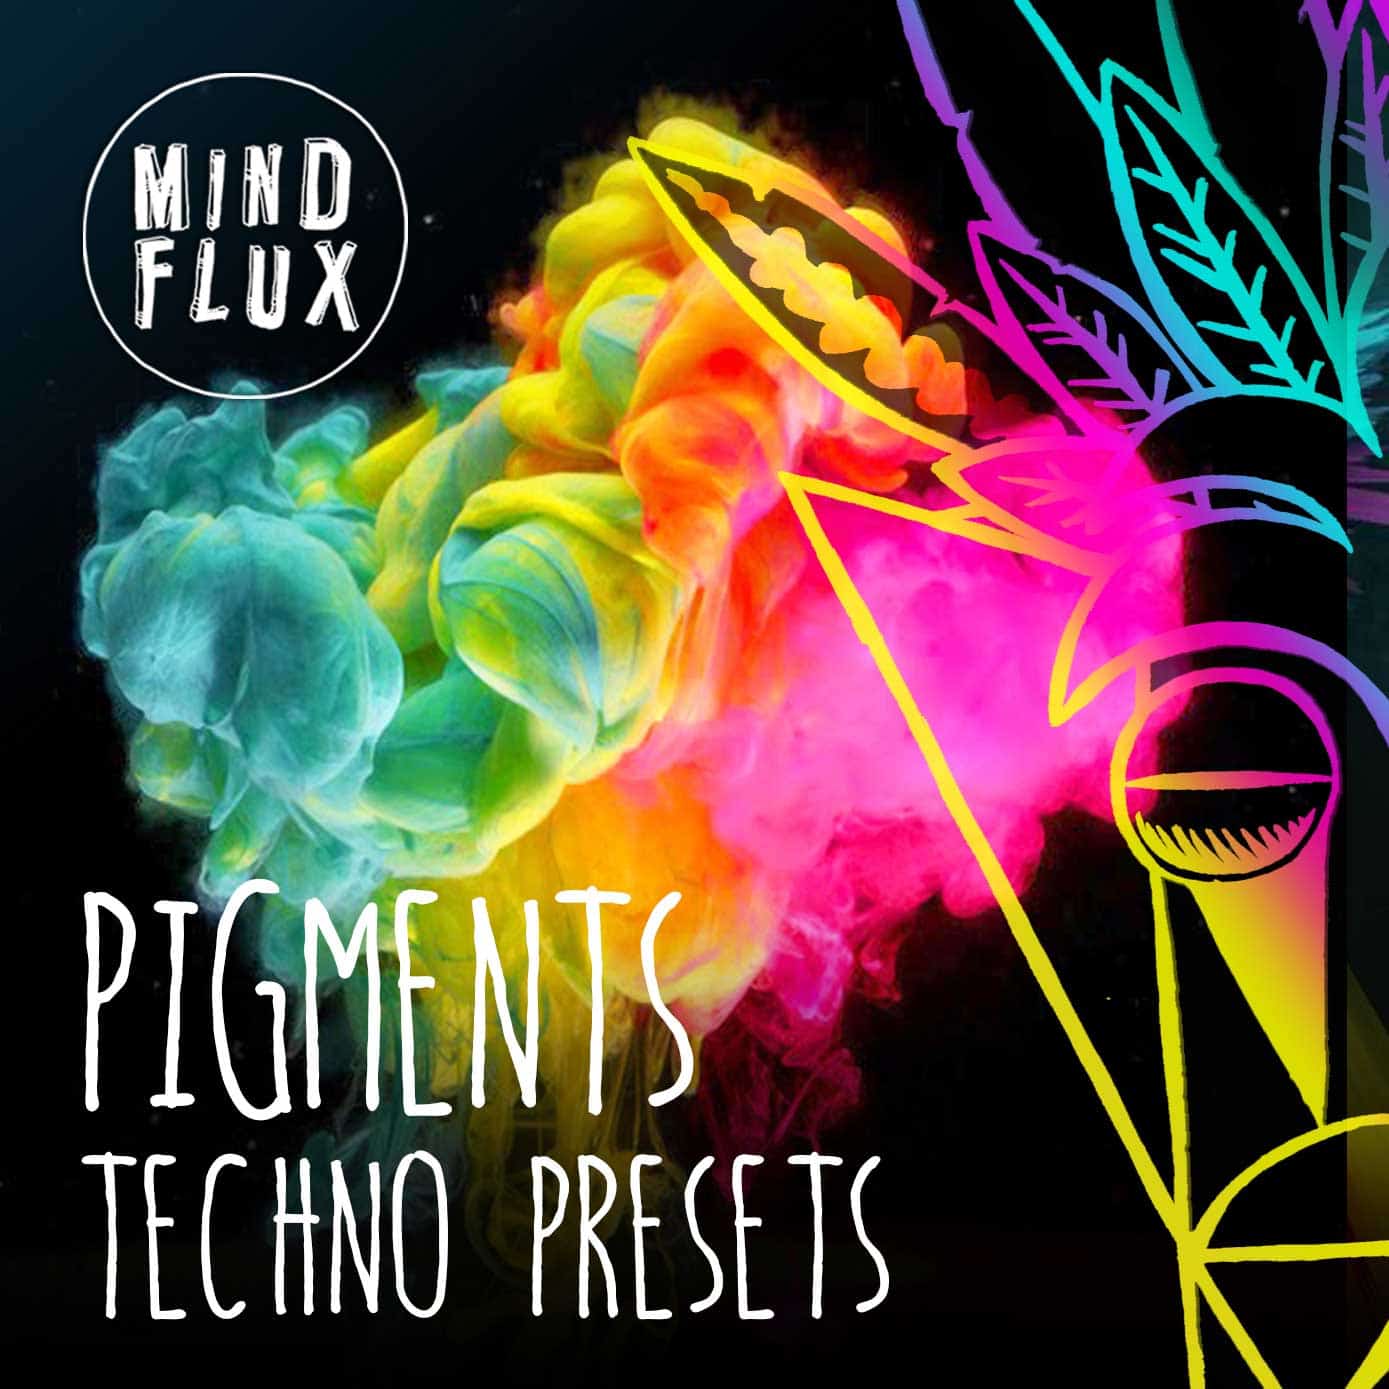 mindflux pigments presets 1000WEB